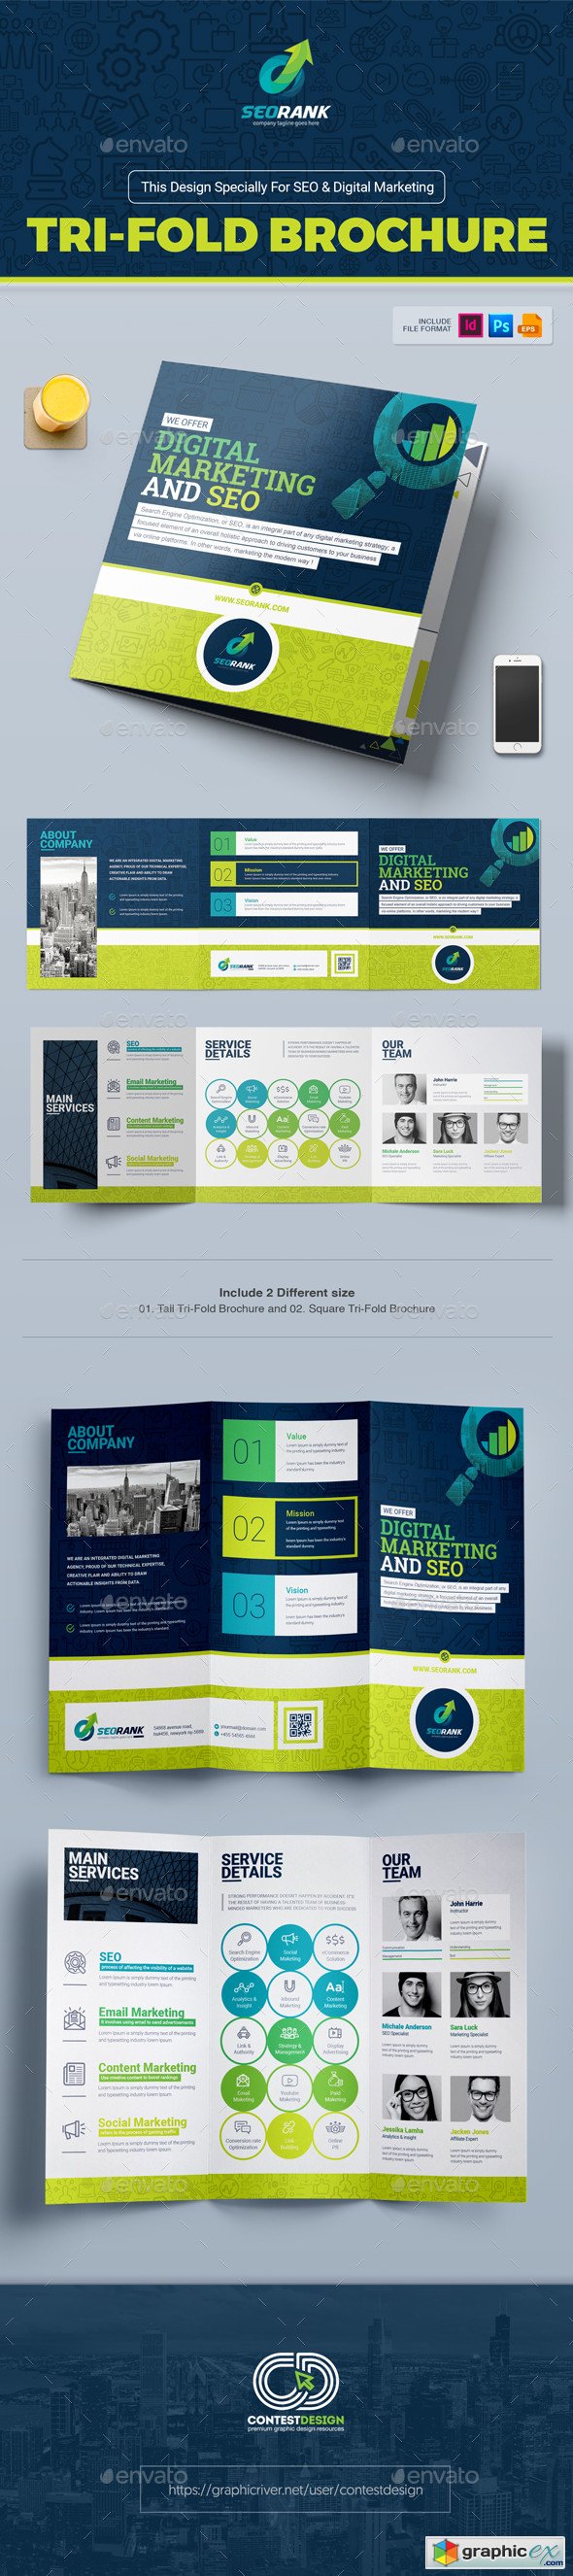 Tri-Fold Brochure Template for SEO (Search Engine Optimization) & Digital Marketing Agency Company